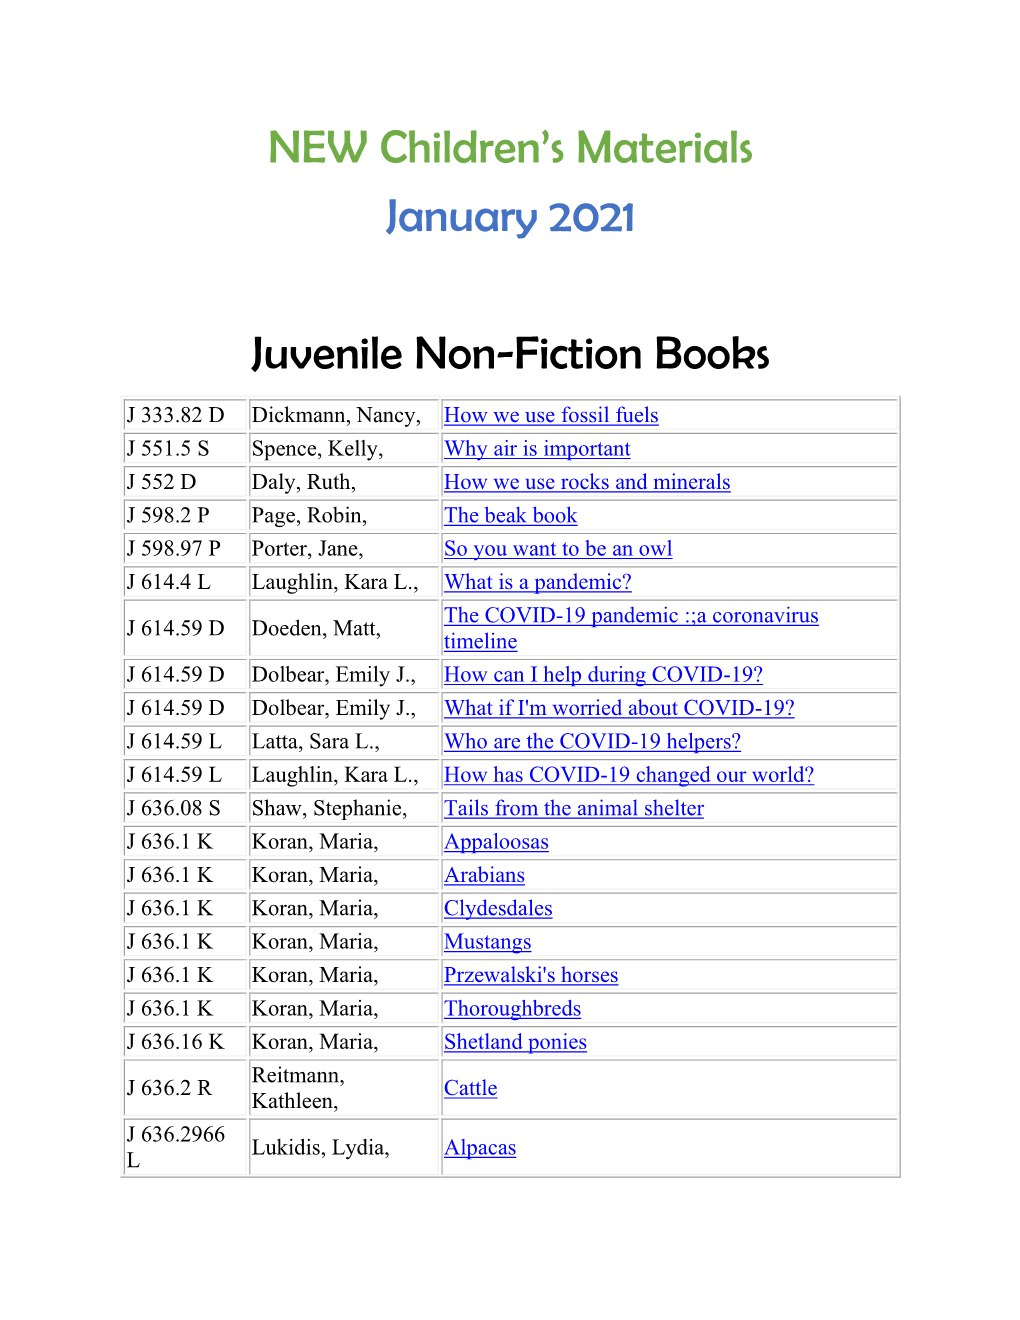 NEW Children's Materials January 2021 Juvenile Non-Fiction Books